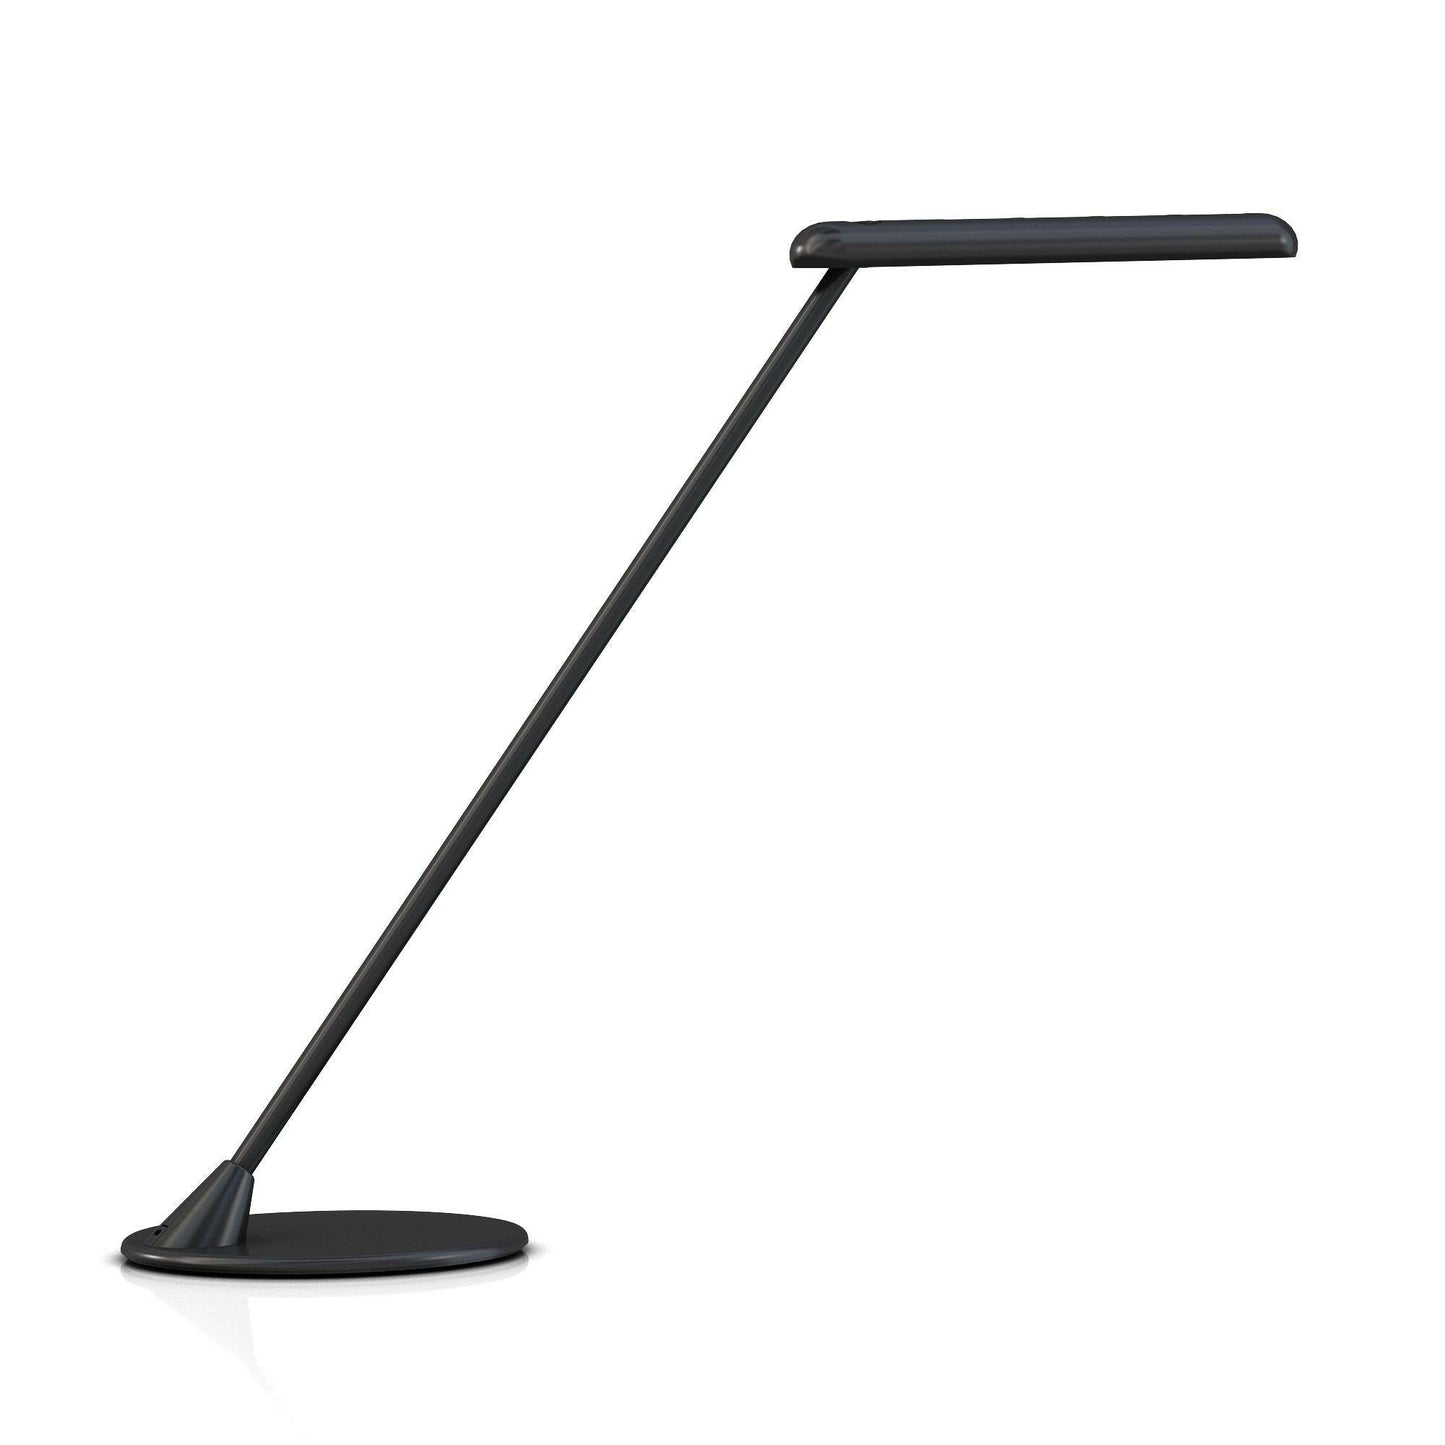 Flute Personal Desk Lamp